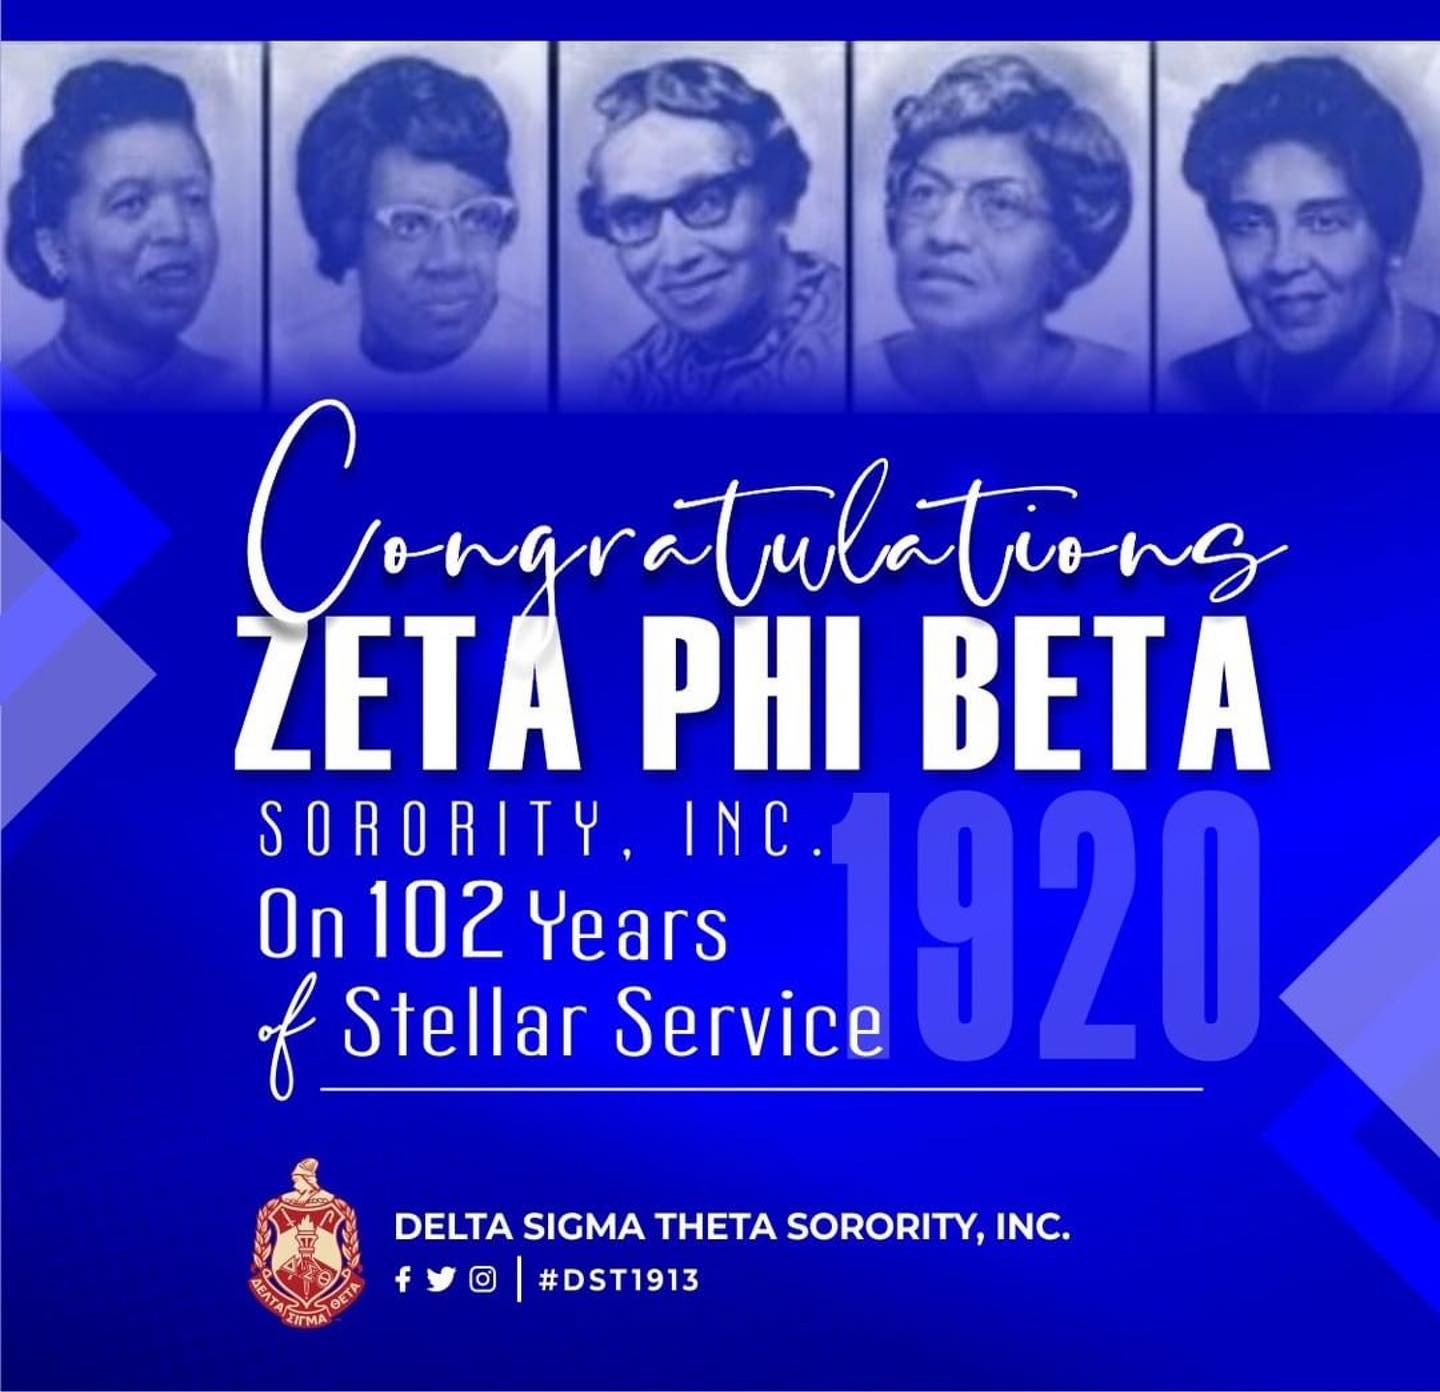 #Repost @dstinc1913
・・・
Congratulations to the wonderful women of Zeta Phi Beta Sorority, Incorporated on 102 years of stellar service! #ZPhiB @officialzeta1920